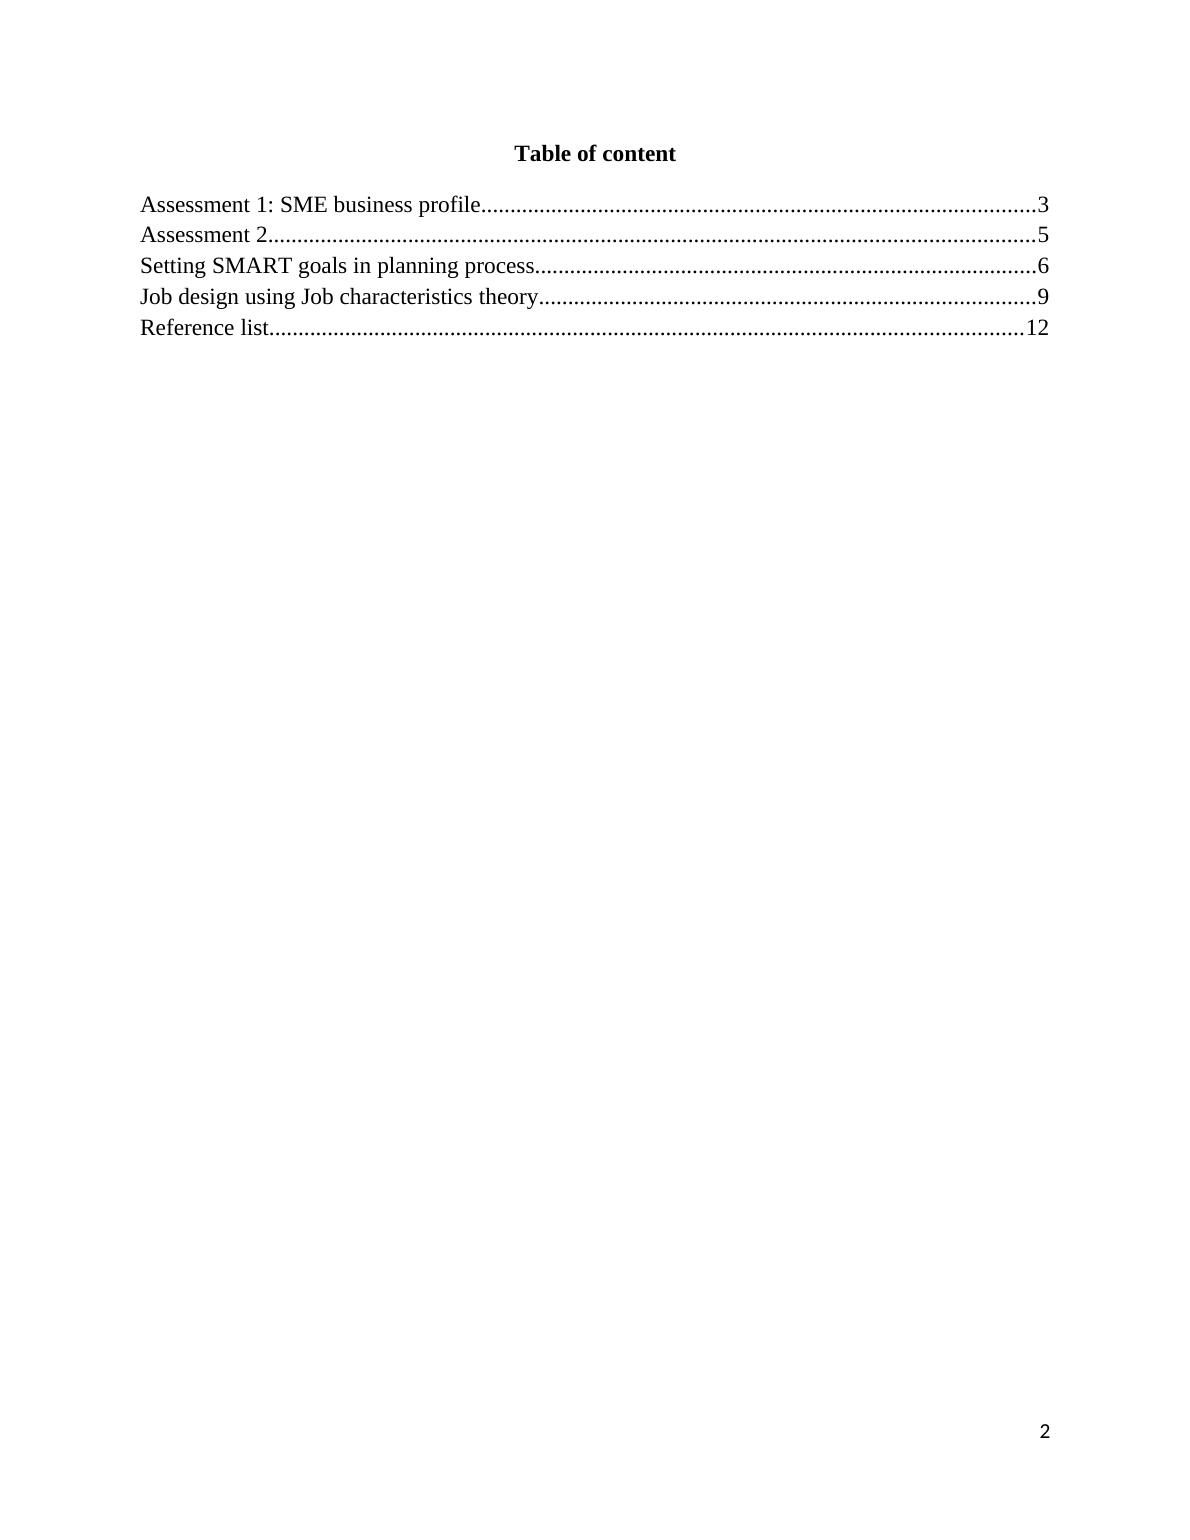 SME Business Profile Assessment_2